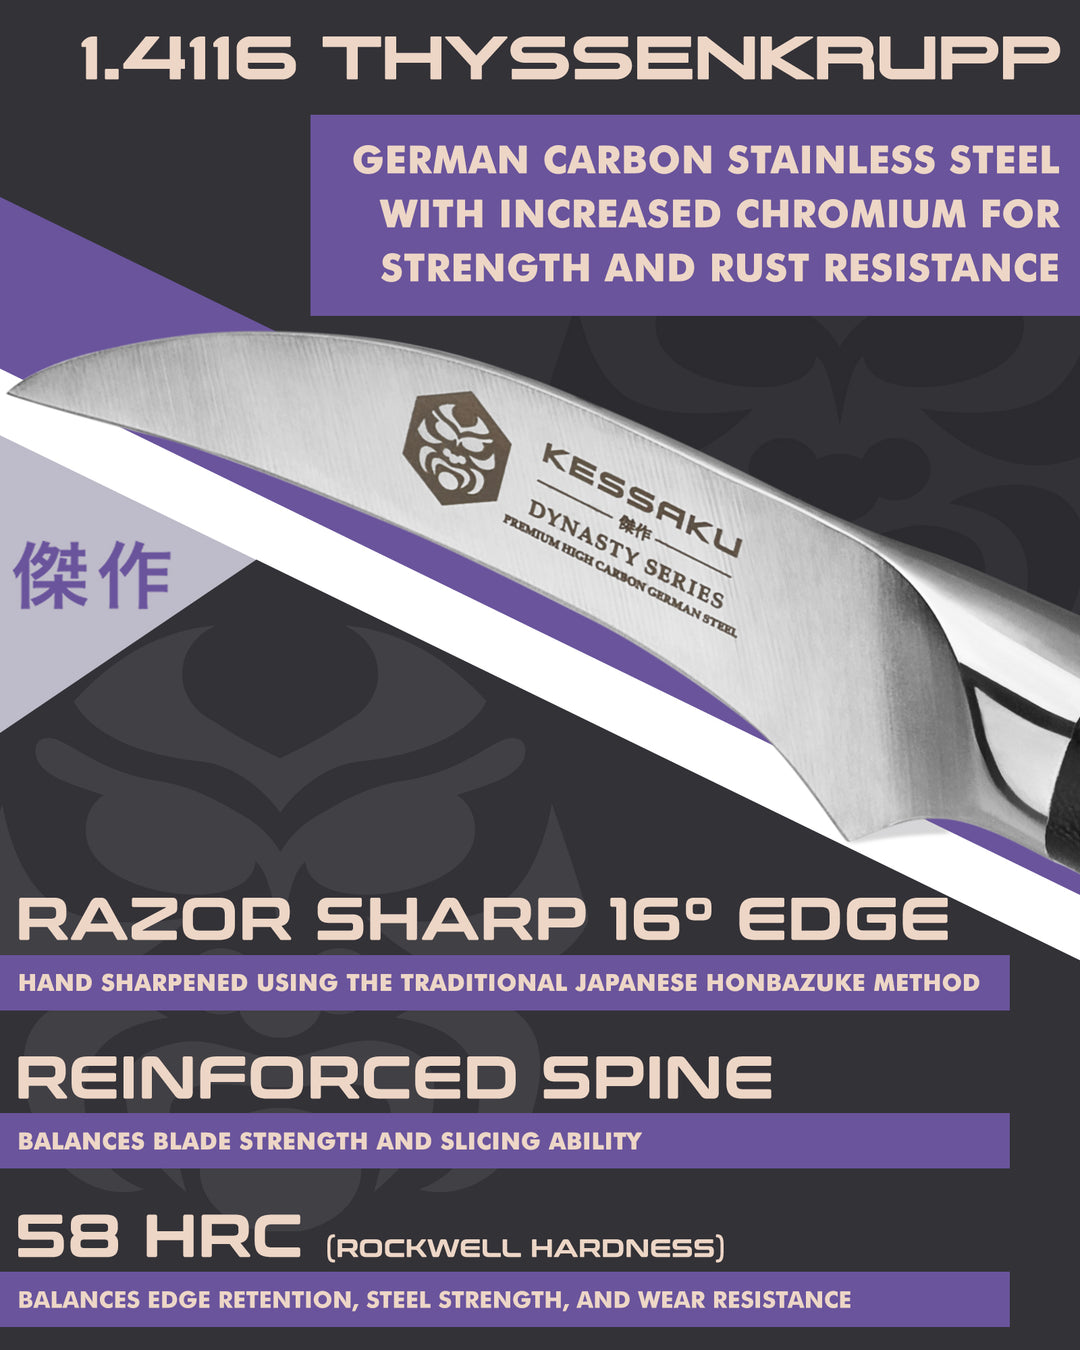 Kessaku Dynasty Tourne Knife blade features: 1.4116 German steel, 58 HRC, sharpened to 16 degrees, reinforced spine